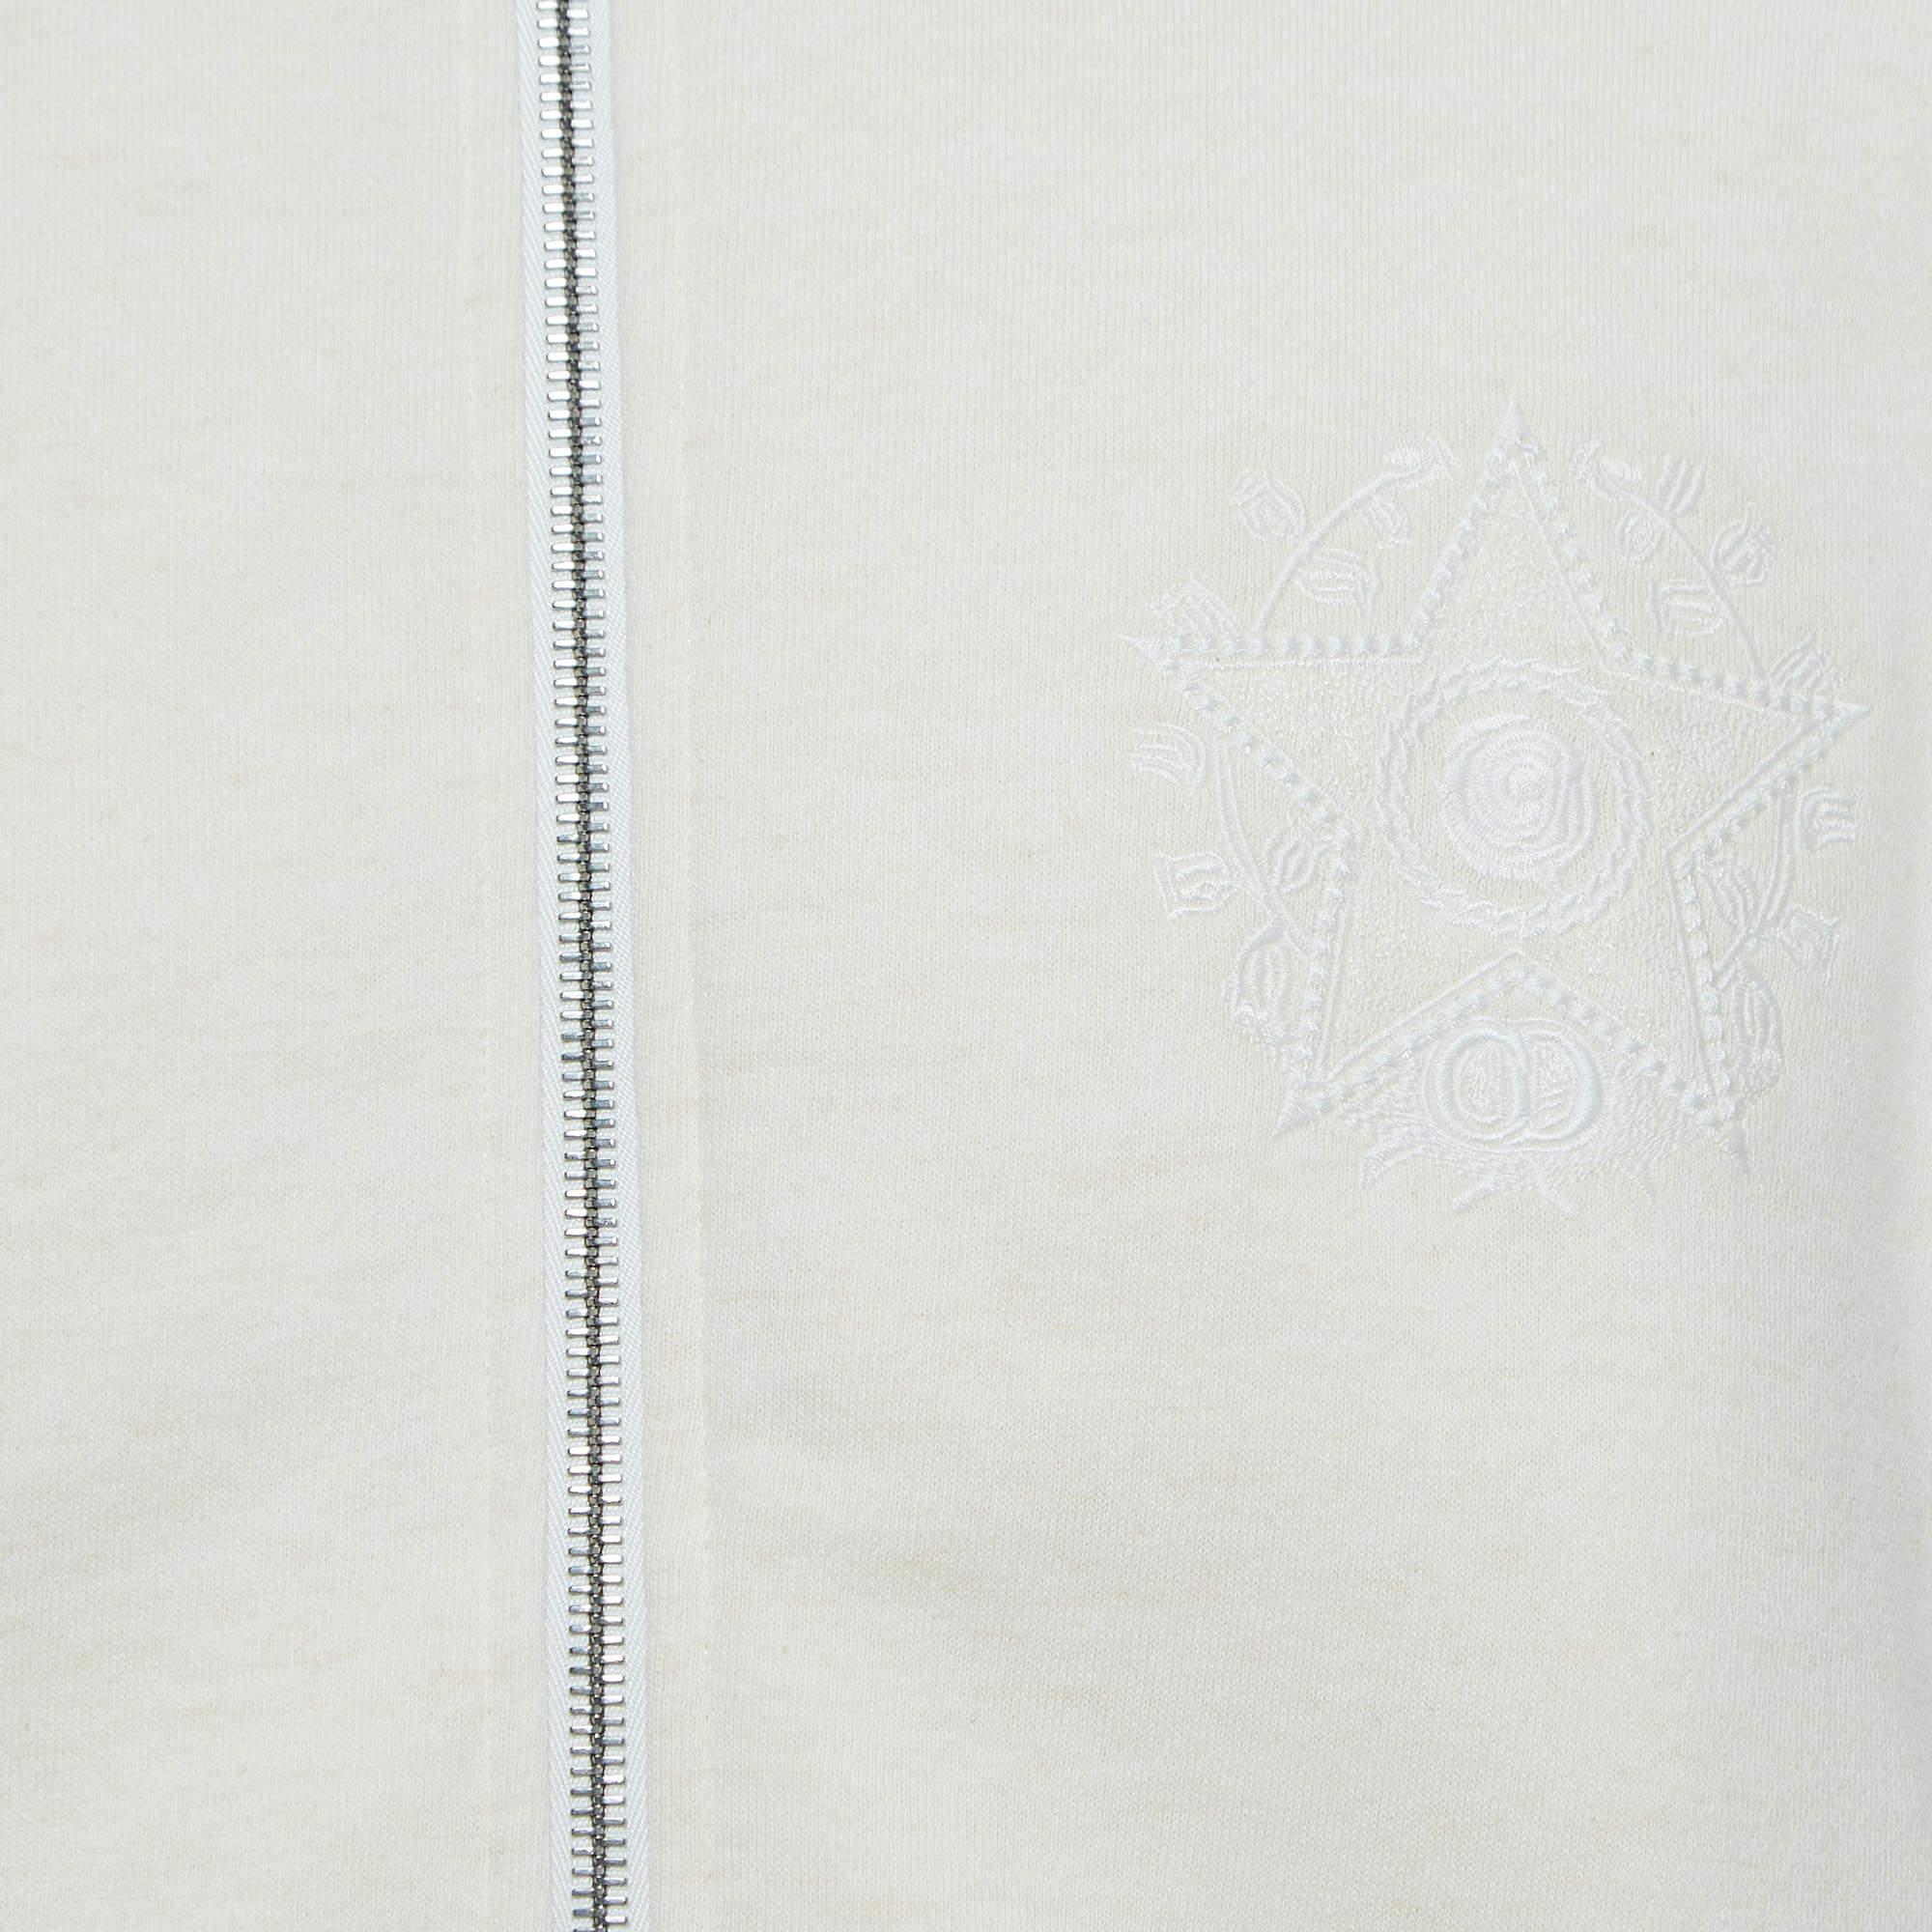 Dior Homme Cream Embroidered Cotton Blend Zip Front Jacket L In Excellent Condition For Sale In Dubai, Al Qouz 2